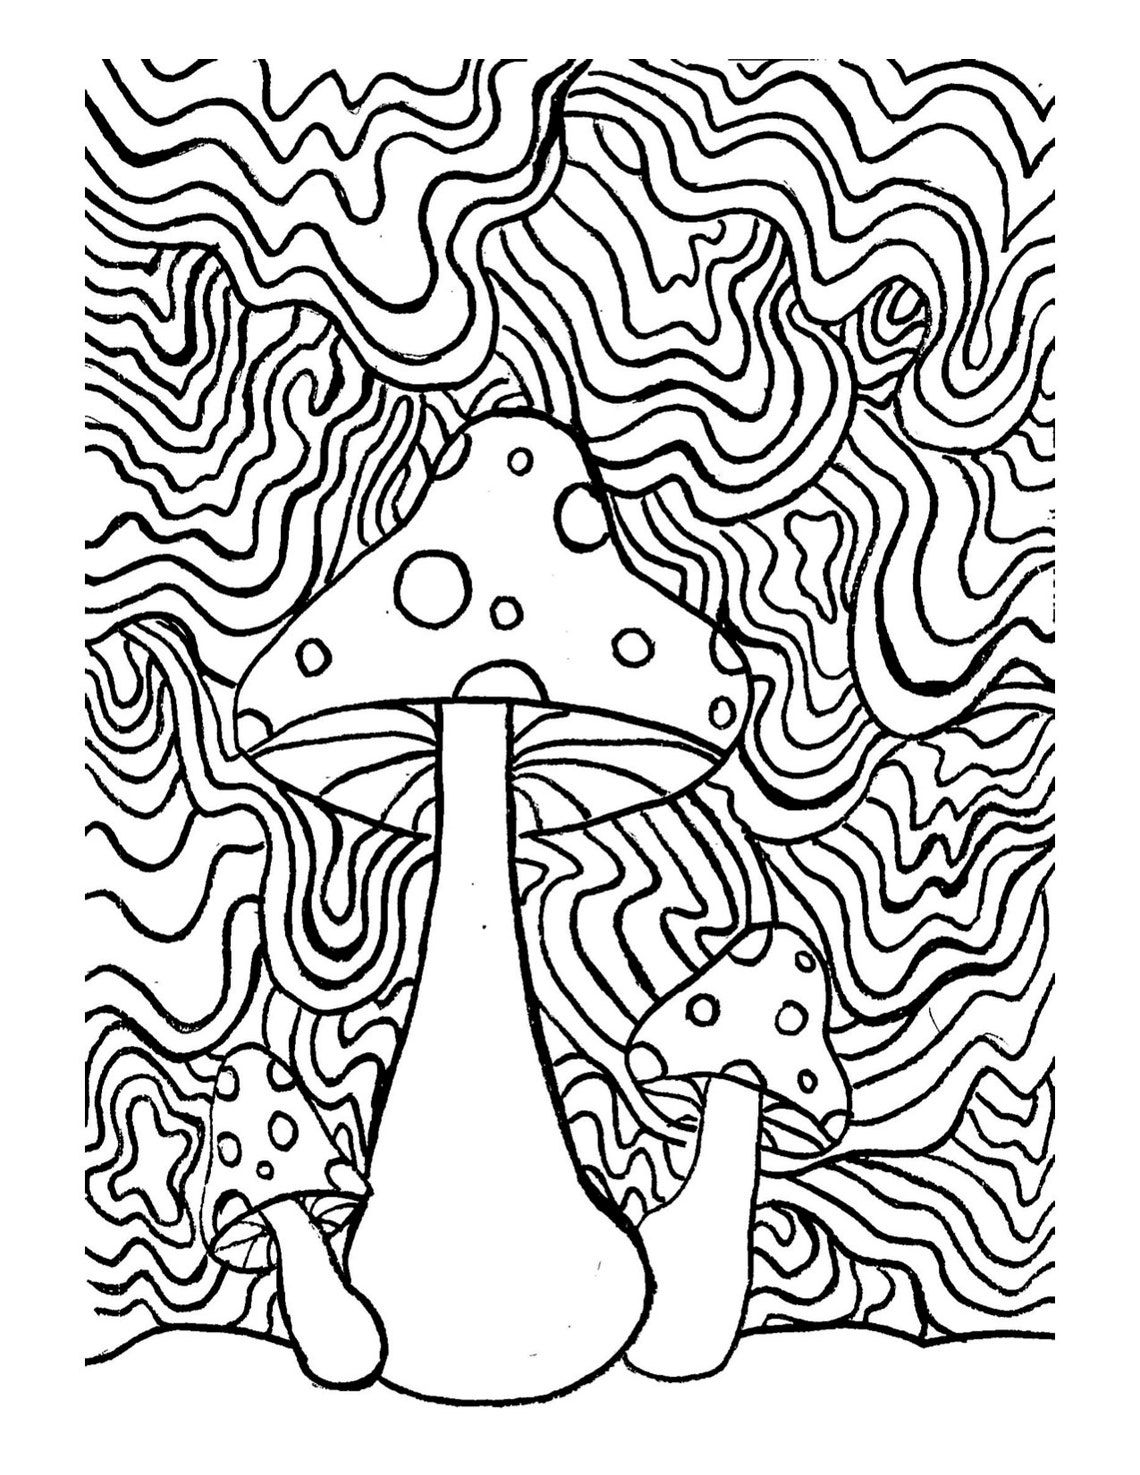 Trippy coloring book page shrooms psychedelic psilocybin | Etsy